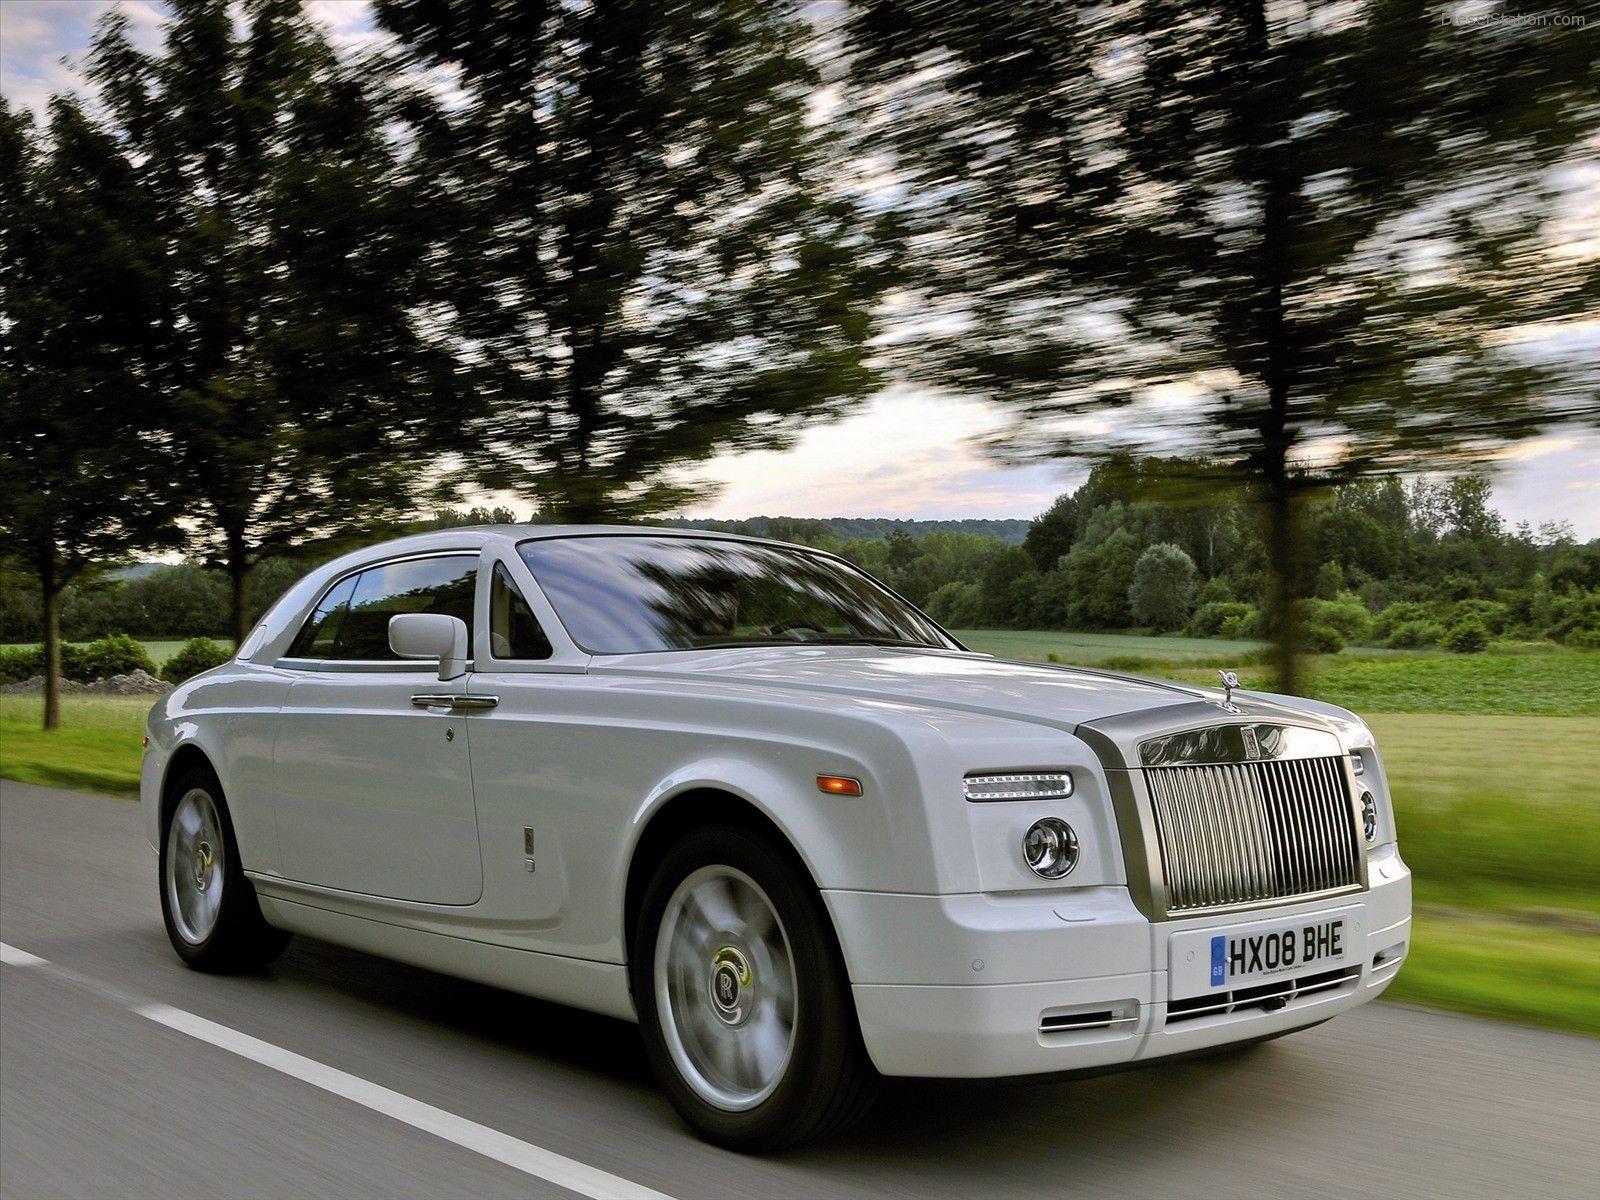 Rolls Royce Phantom Car. Home > Rolls Royce > Rolls Royce Phantom